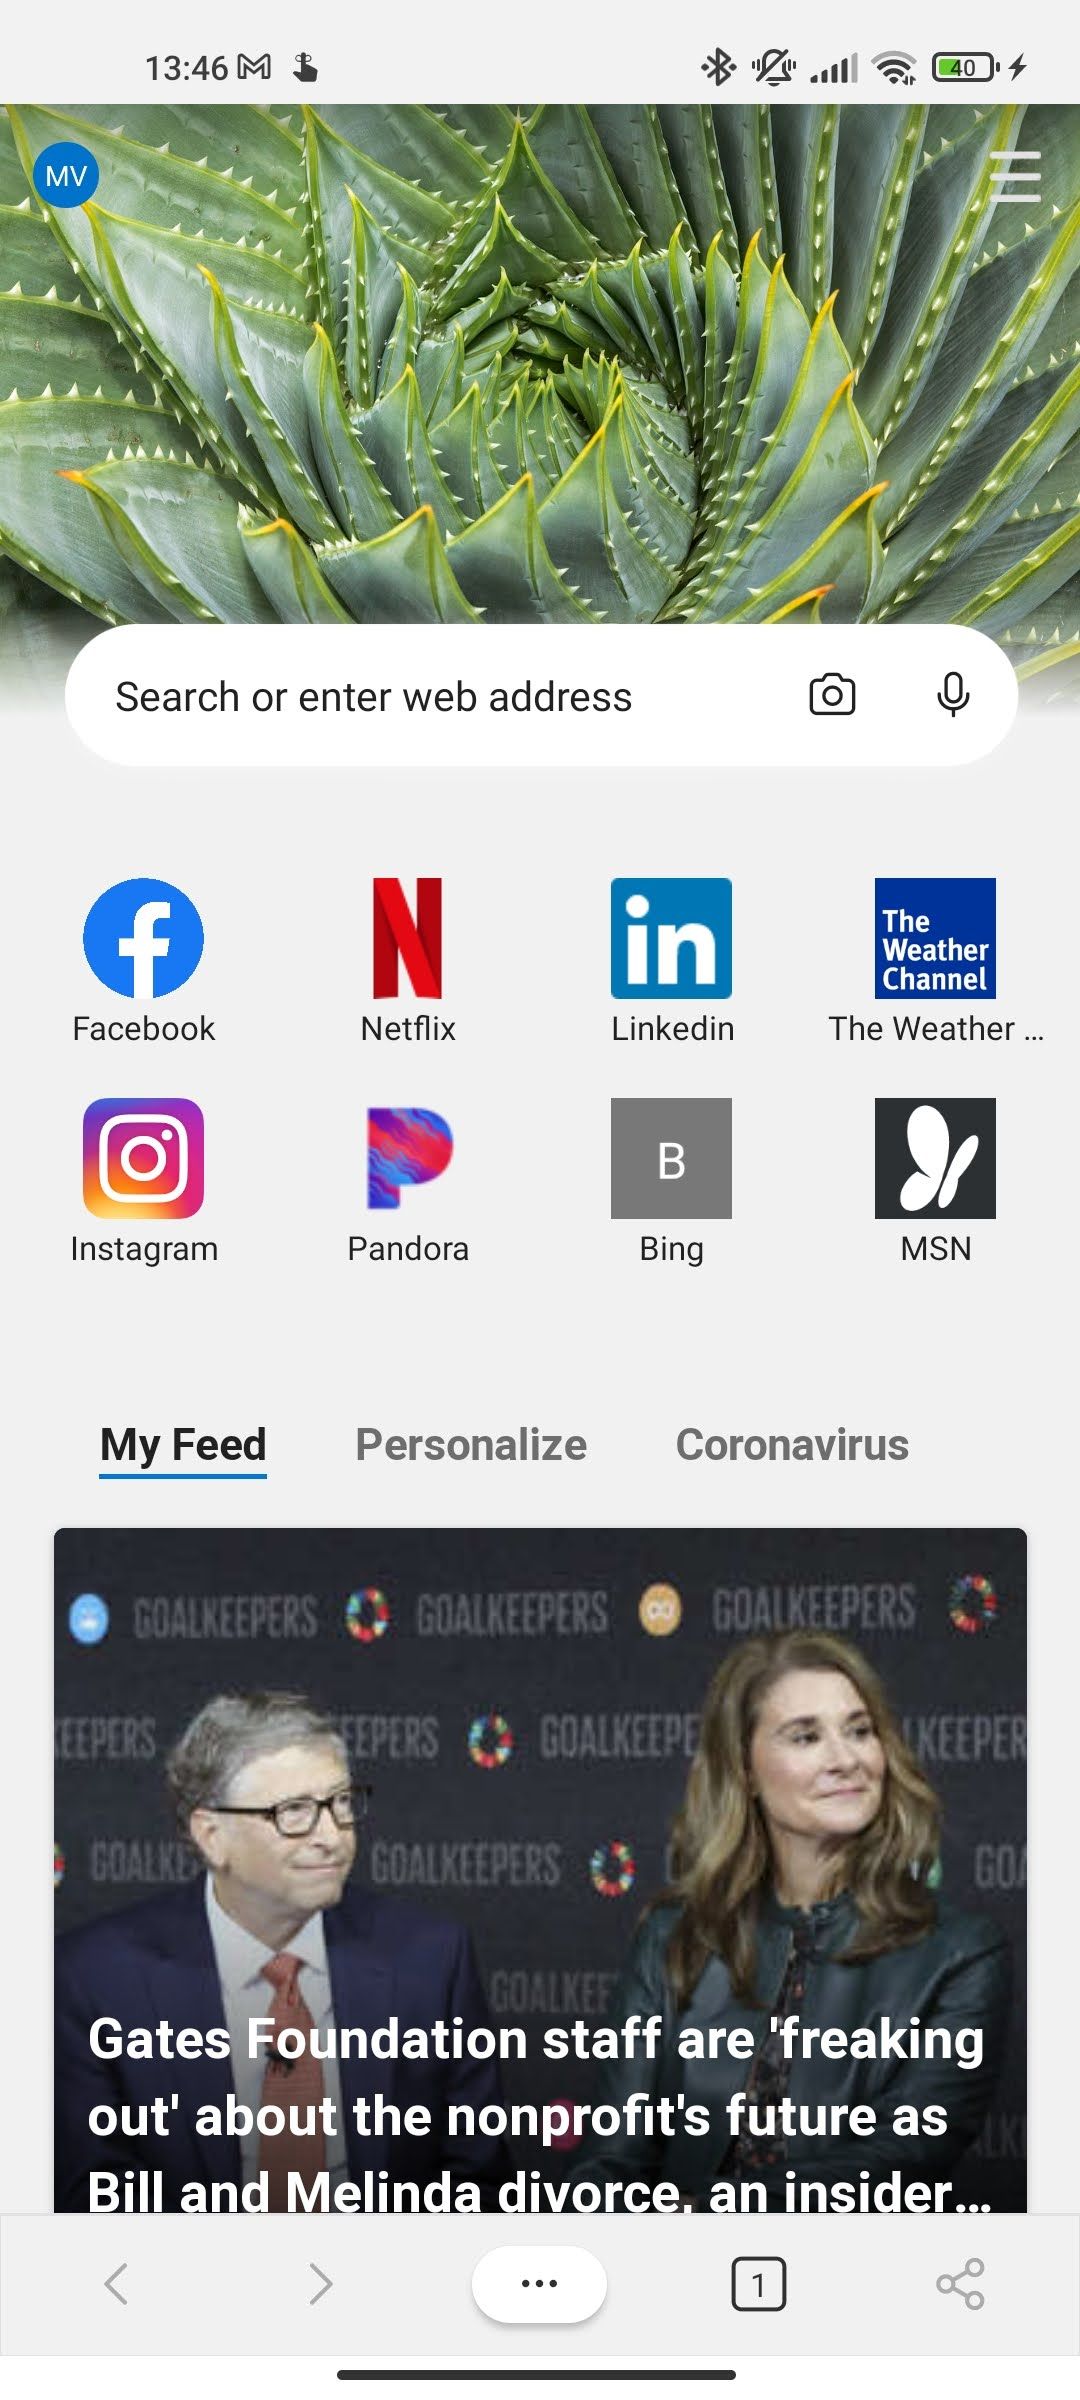 navegador safari for android